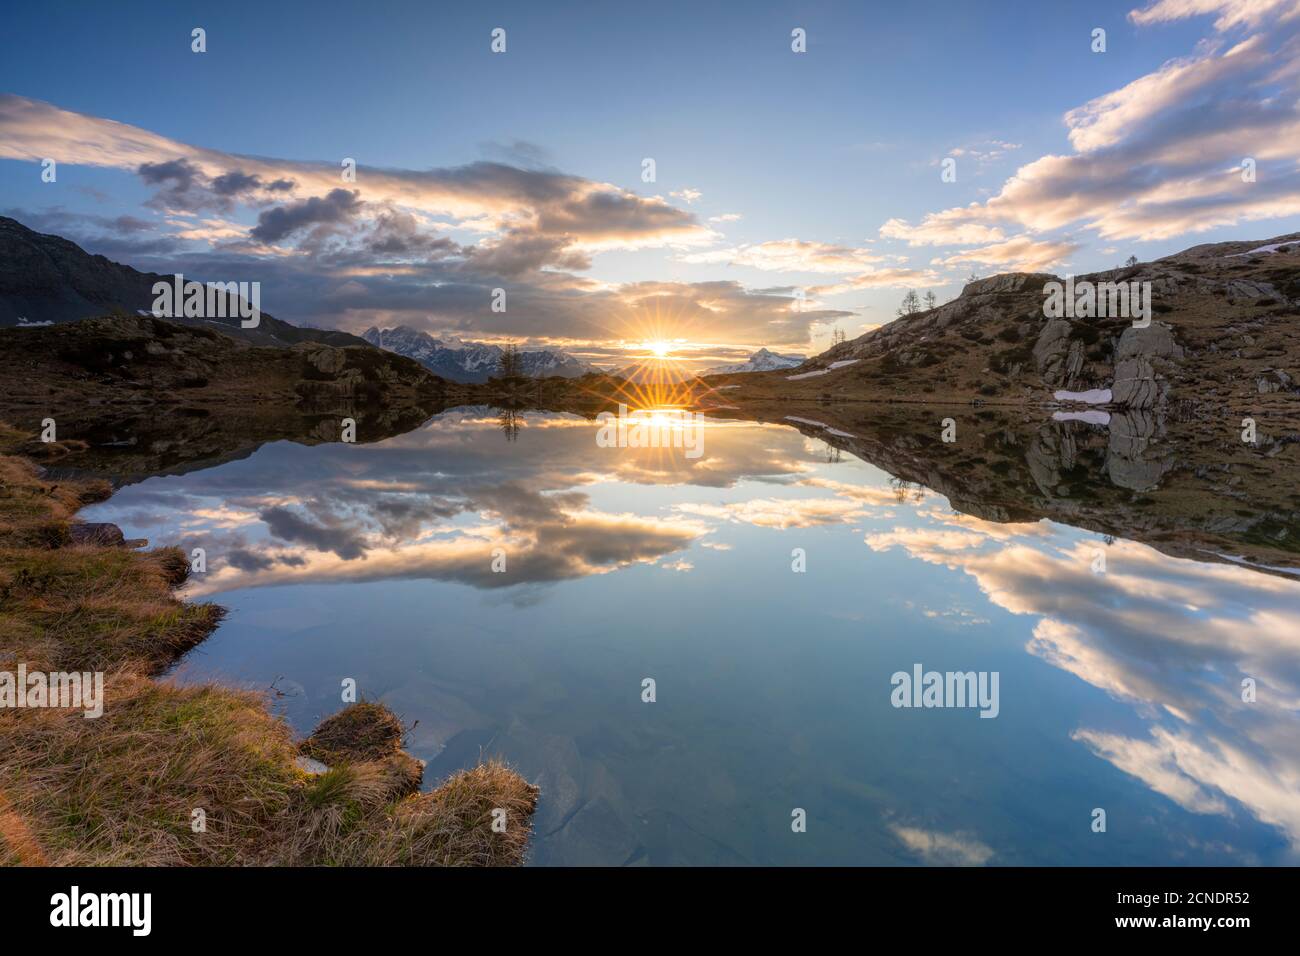 Sunburst über das klare Wasser des Sees Zana bei Sonnenaufgang, Valmalenco, Sondrio Provinz, Valtellina, Lombardei, Italien, Europa Stockfoto